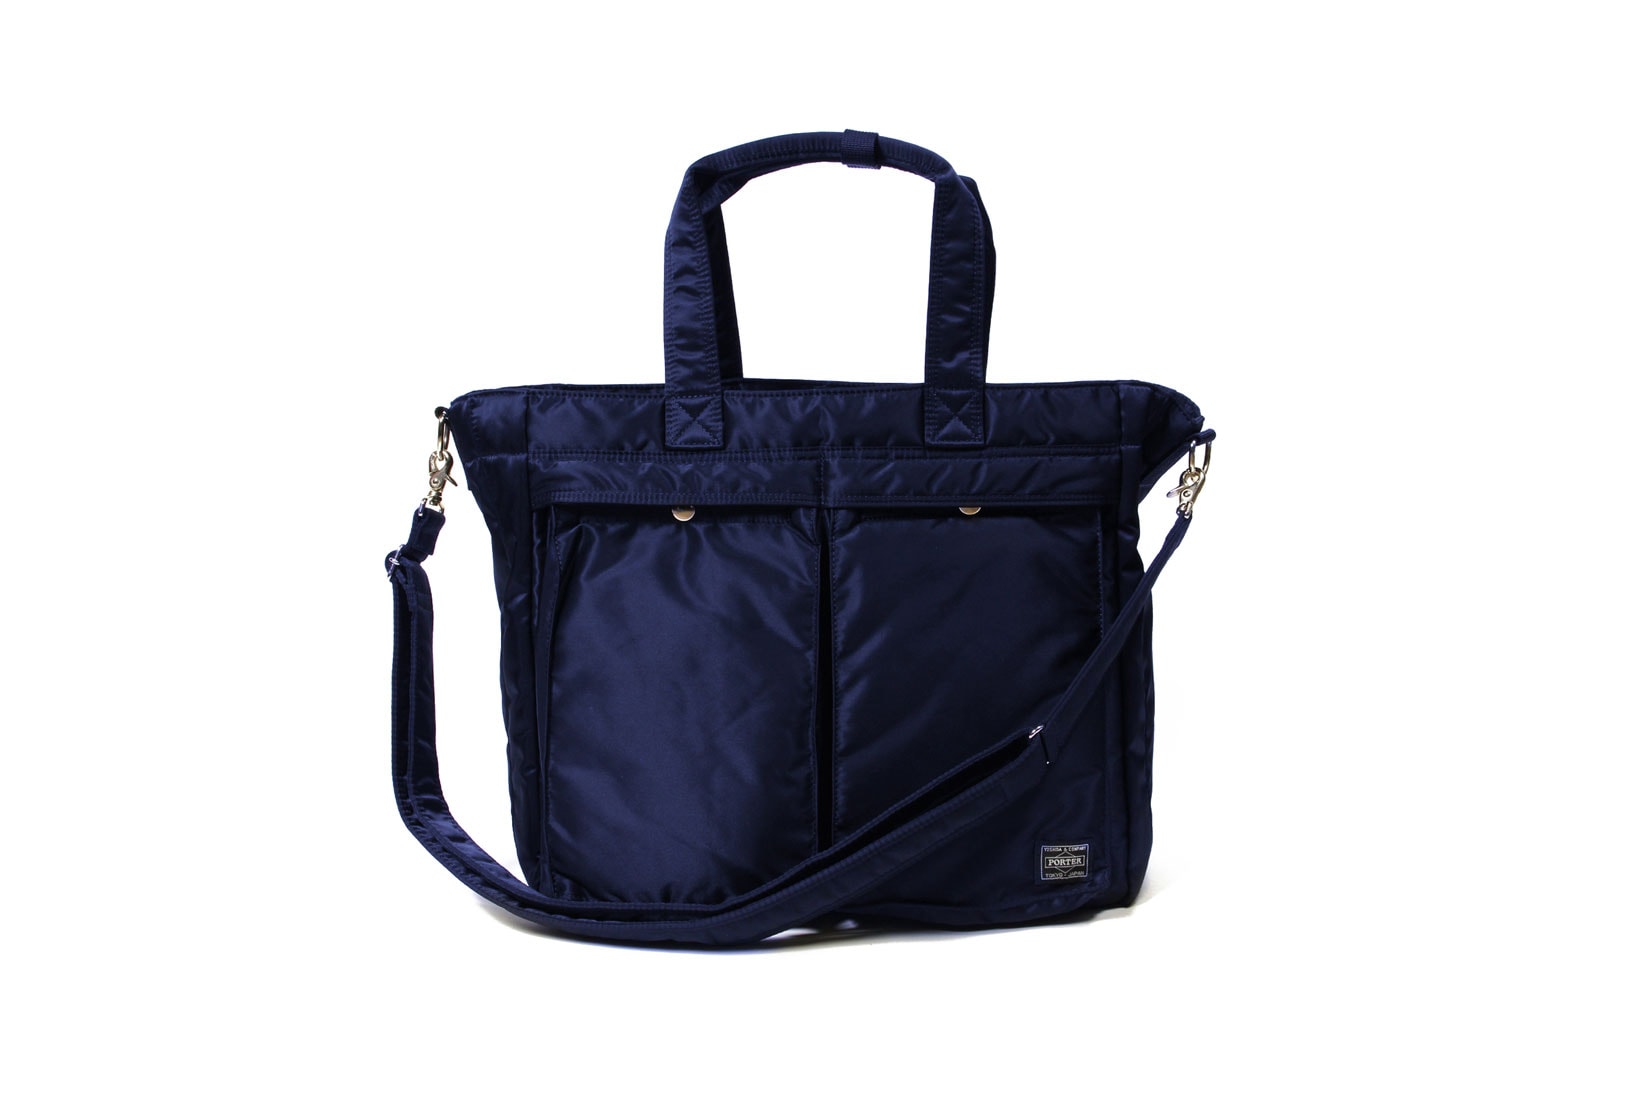 WACKO MARIA PORTER Jet Series Travel Essentials Bags Accessories